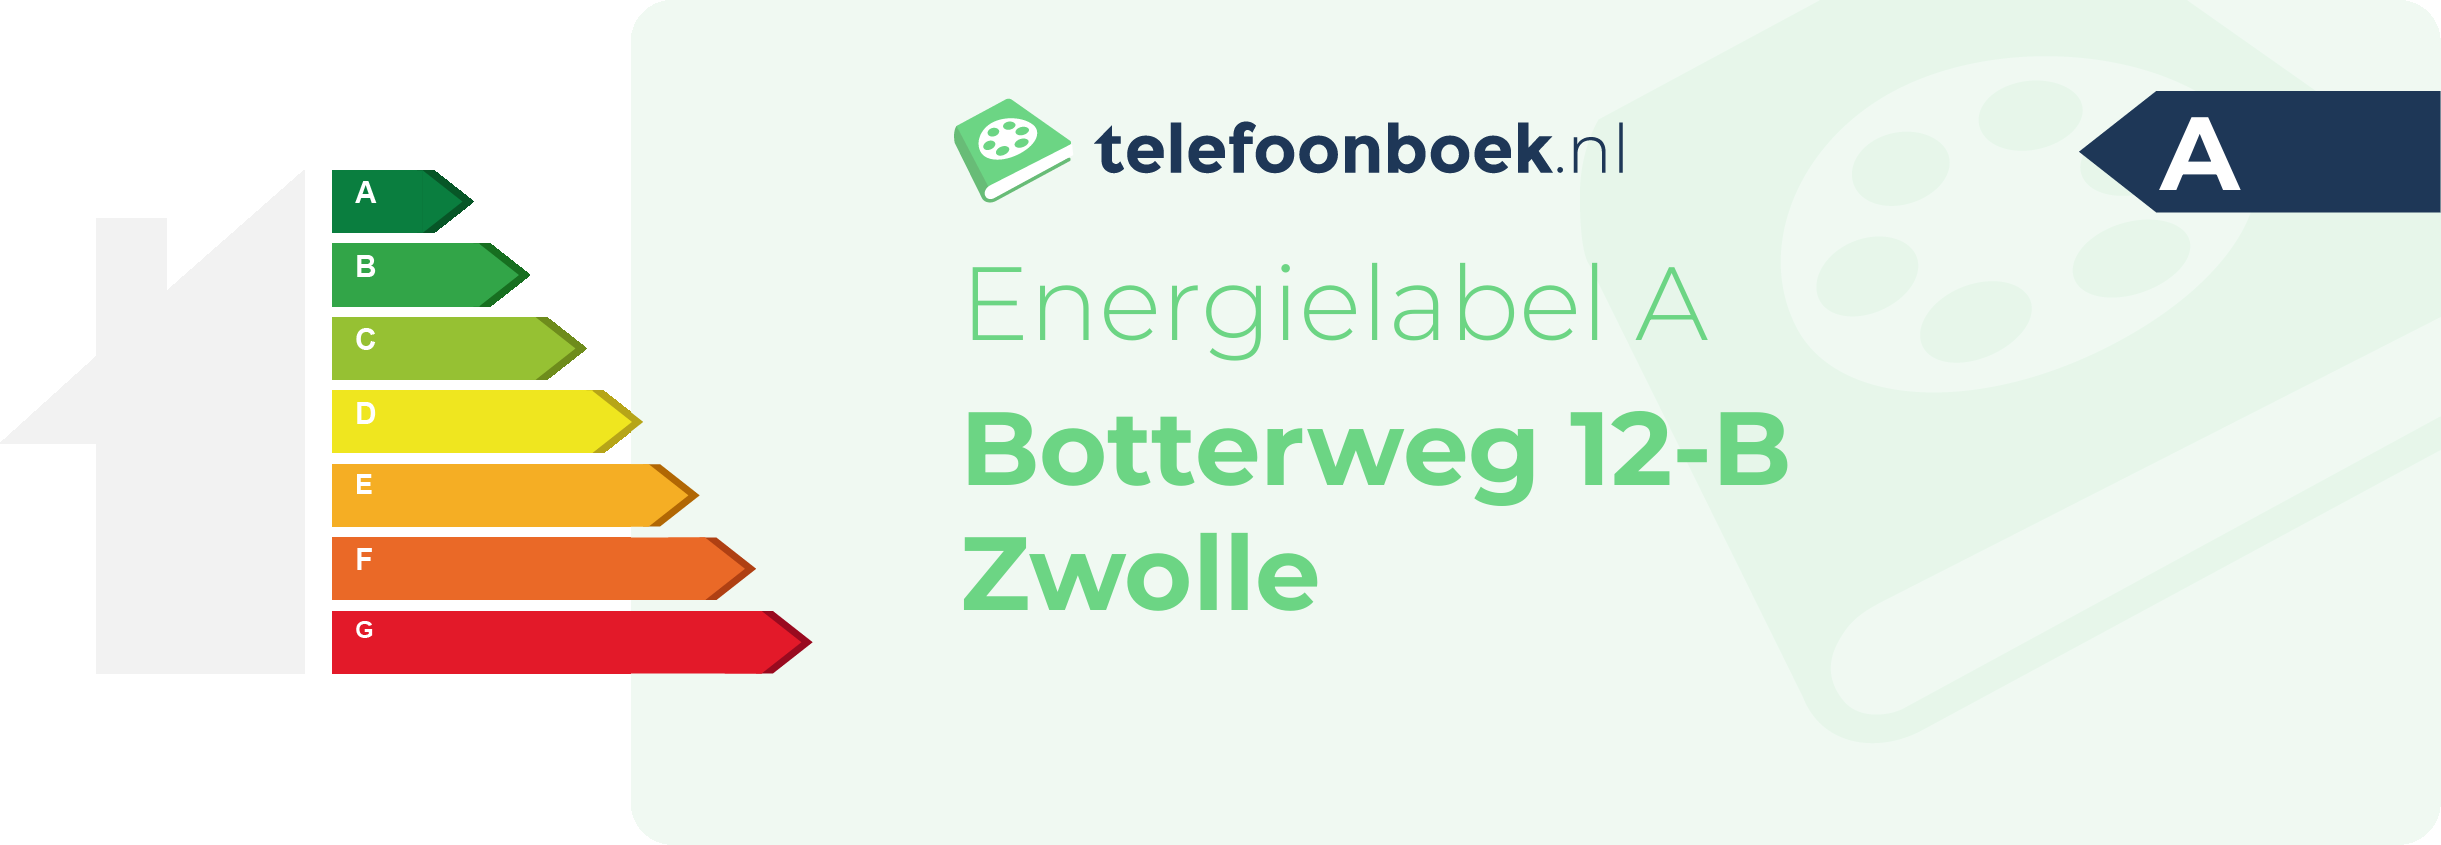 Energielabel Botterweg 12-B Zwolle